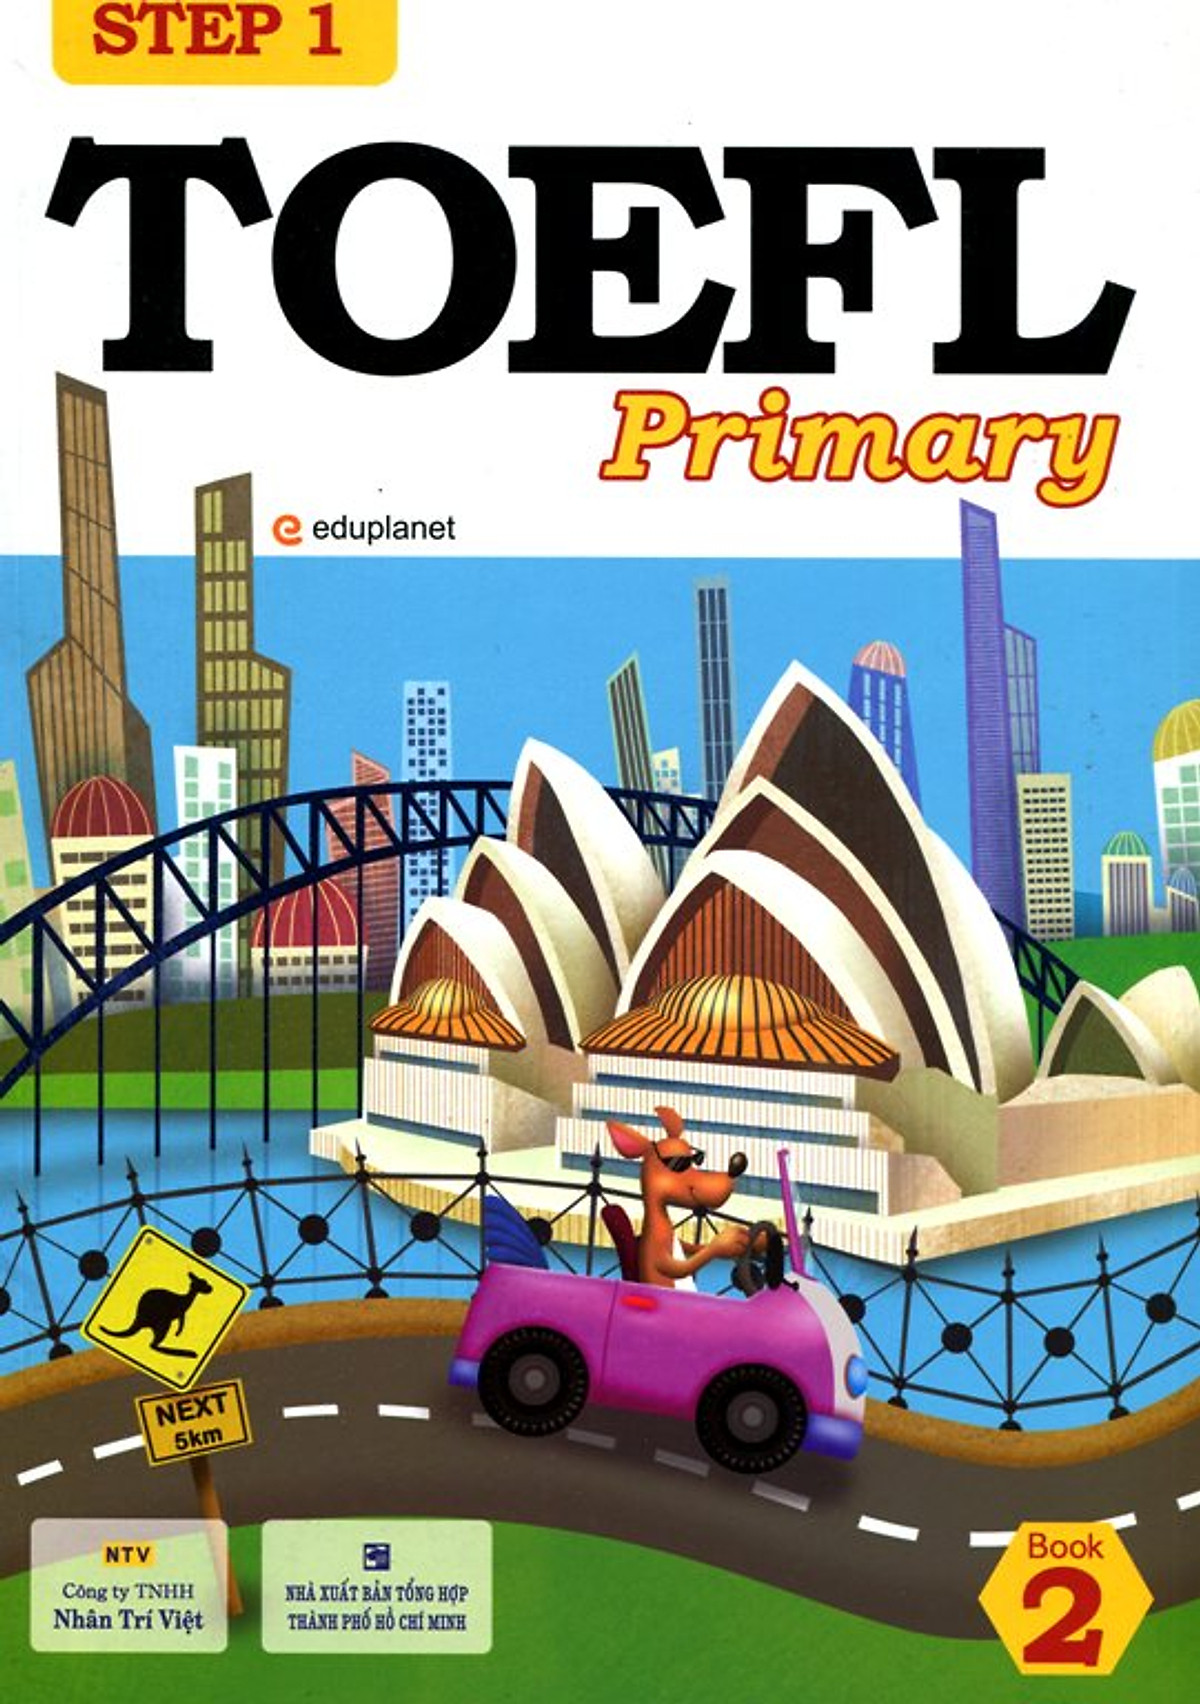 TOEFL Primary Book 2 Step 1 (Kèm CD) 